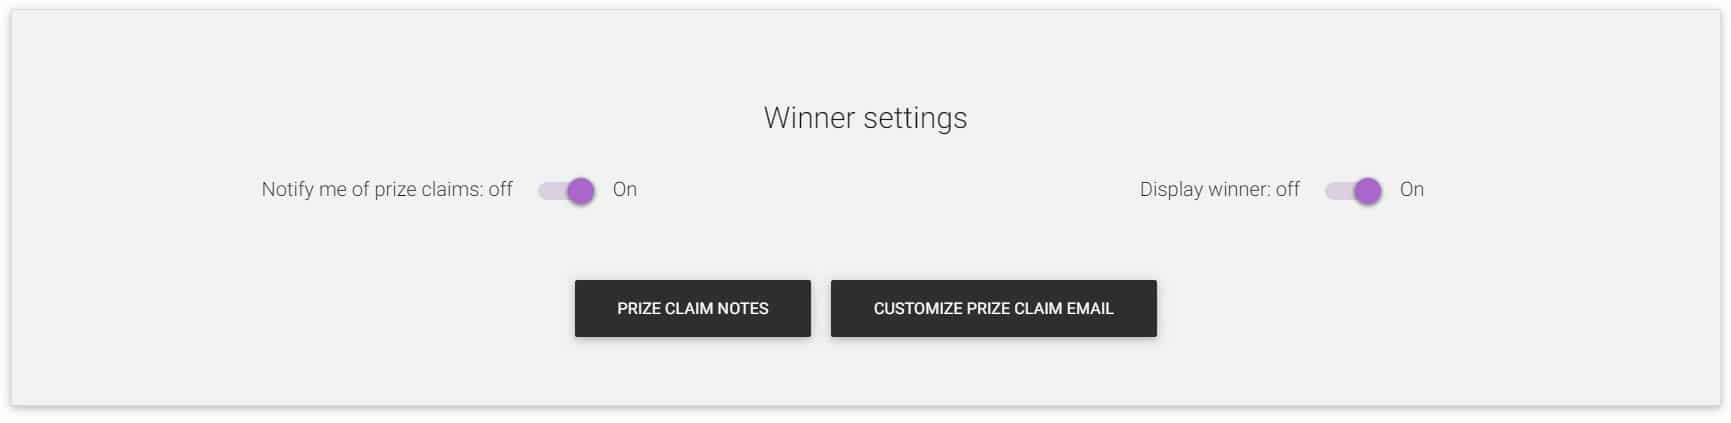 Customize the winner notification email - contest winner generator